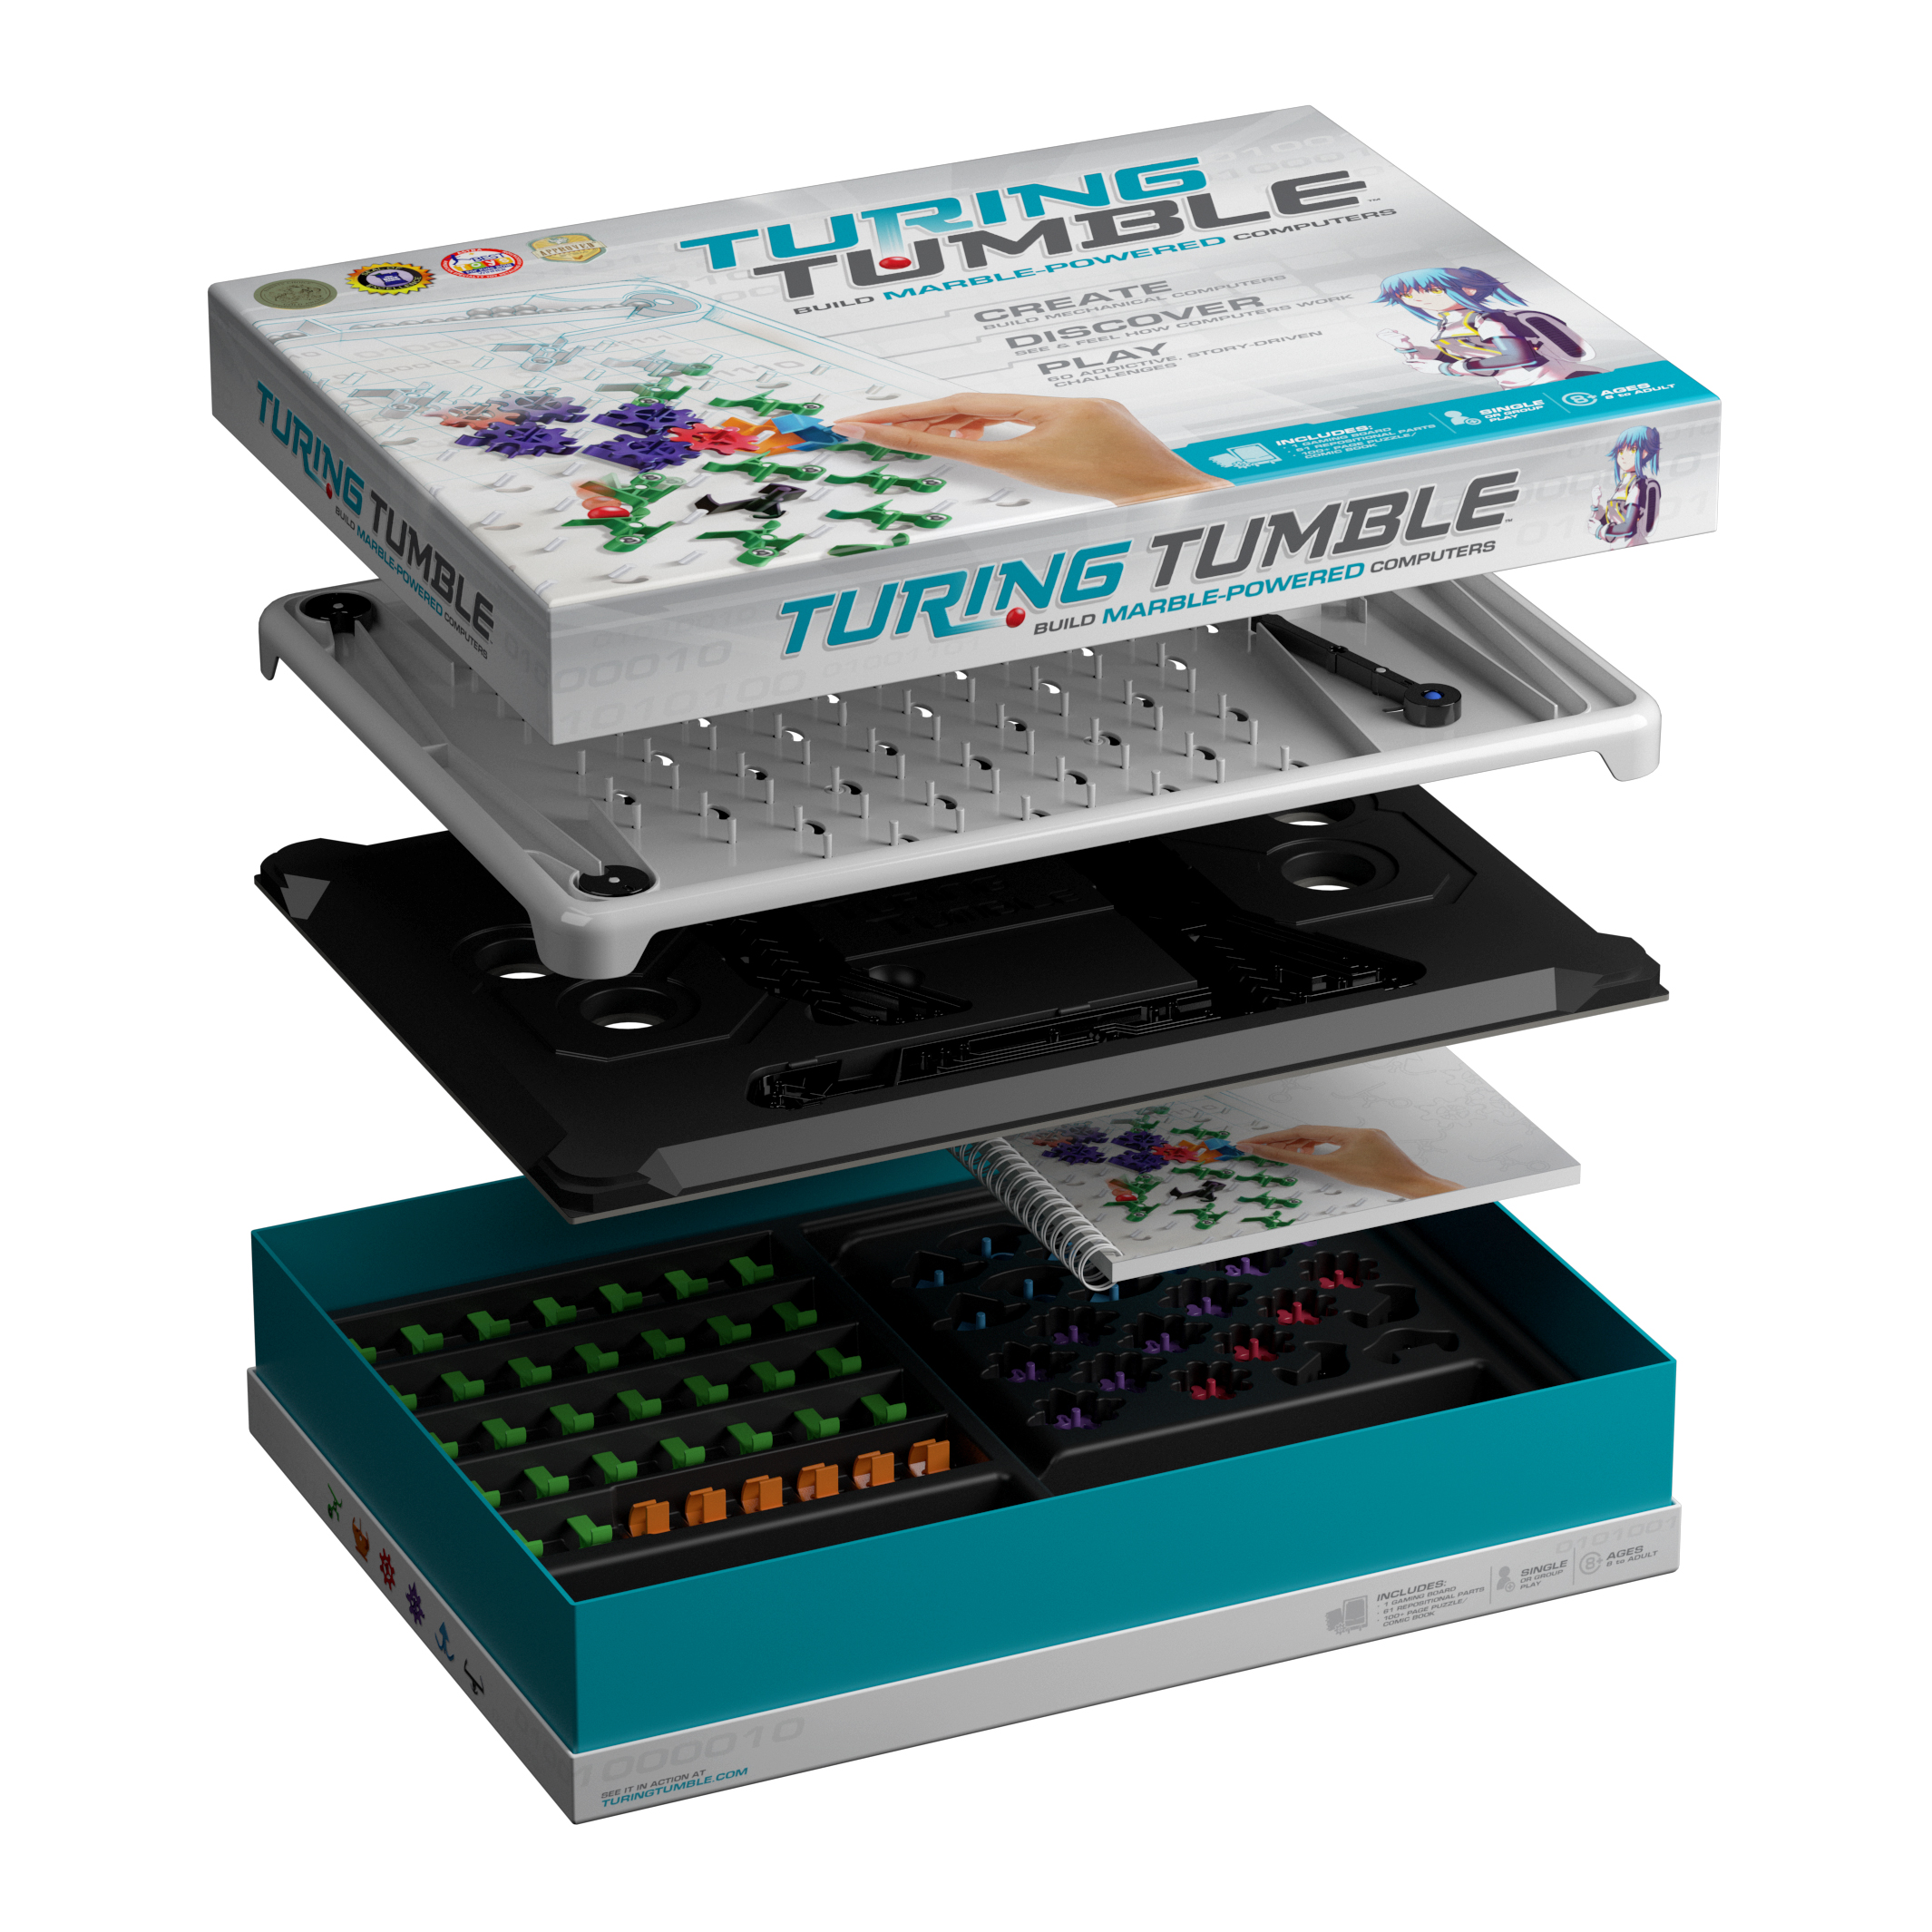 Turing Tumble box showing game box layers